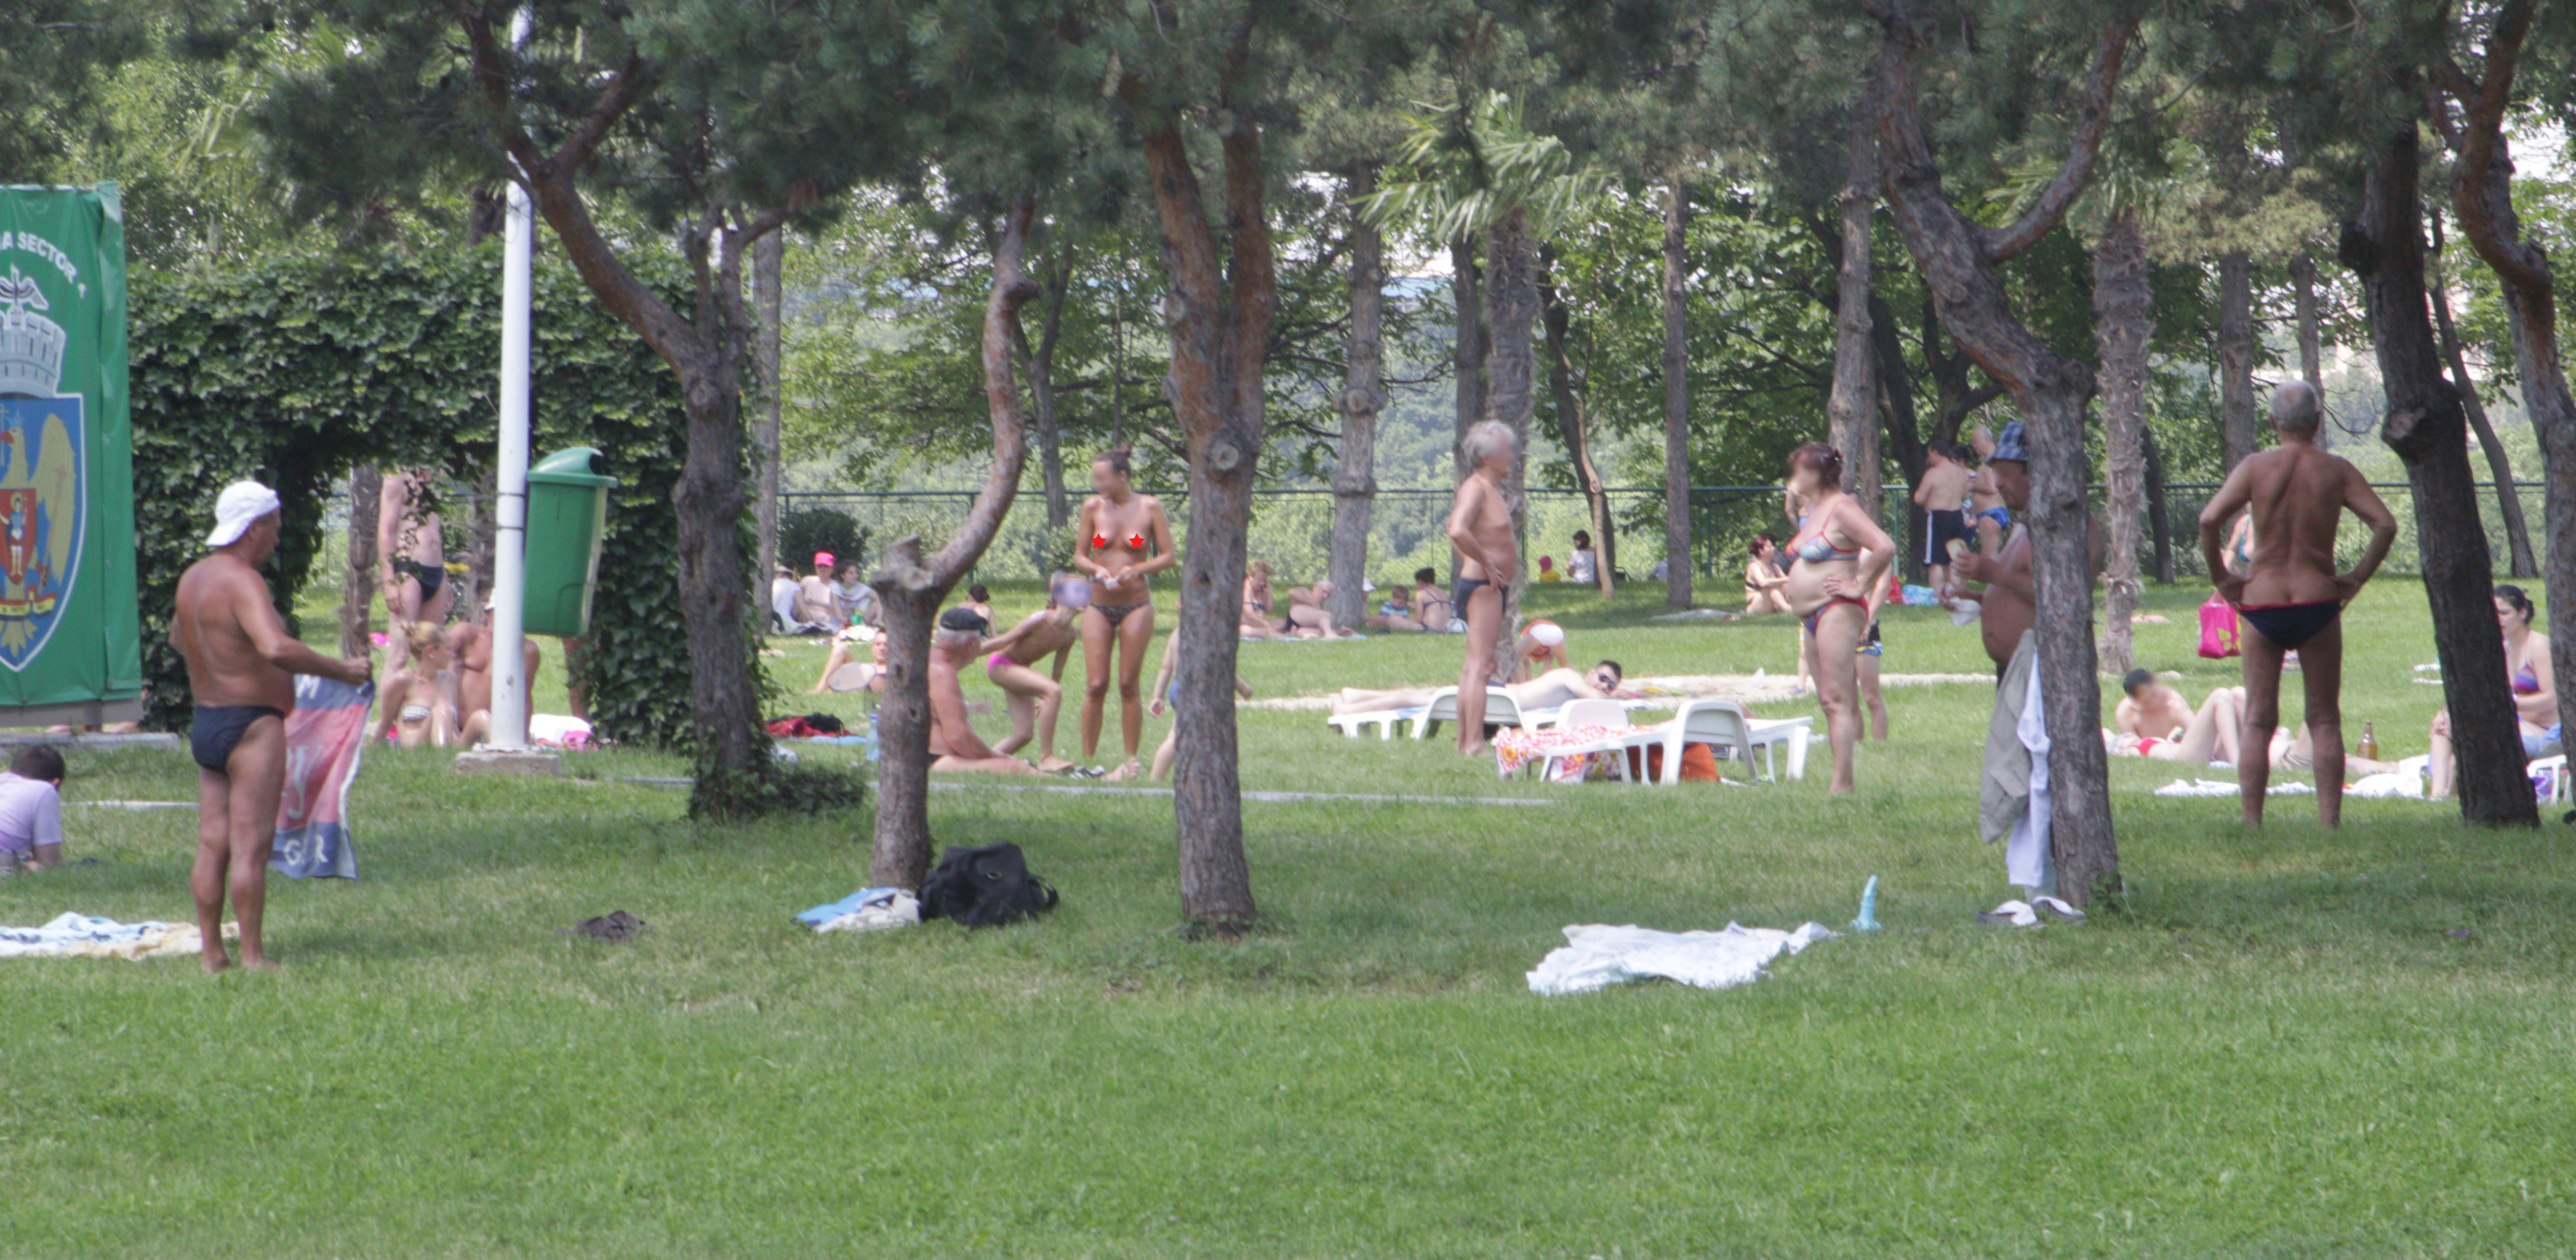 Daca altii au ales sa respecte traditiile de Rusalii, fetele au ales sa se bronzeze in parc topless